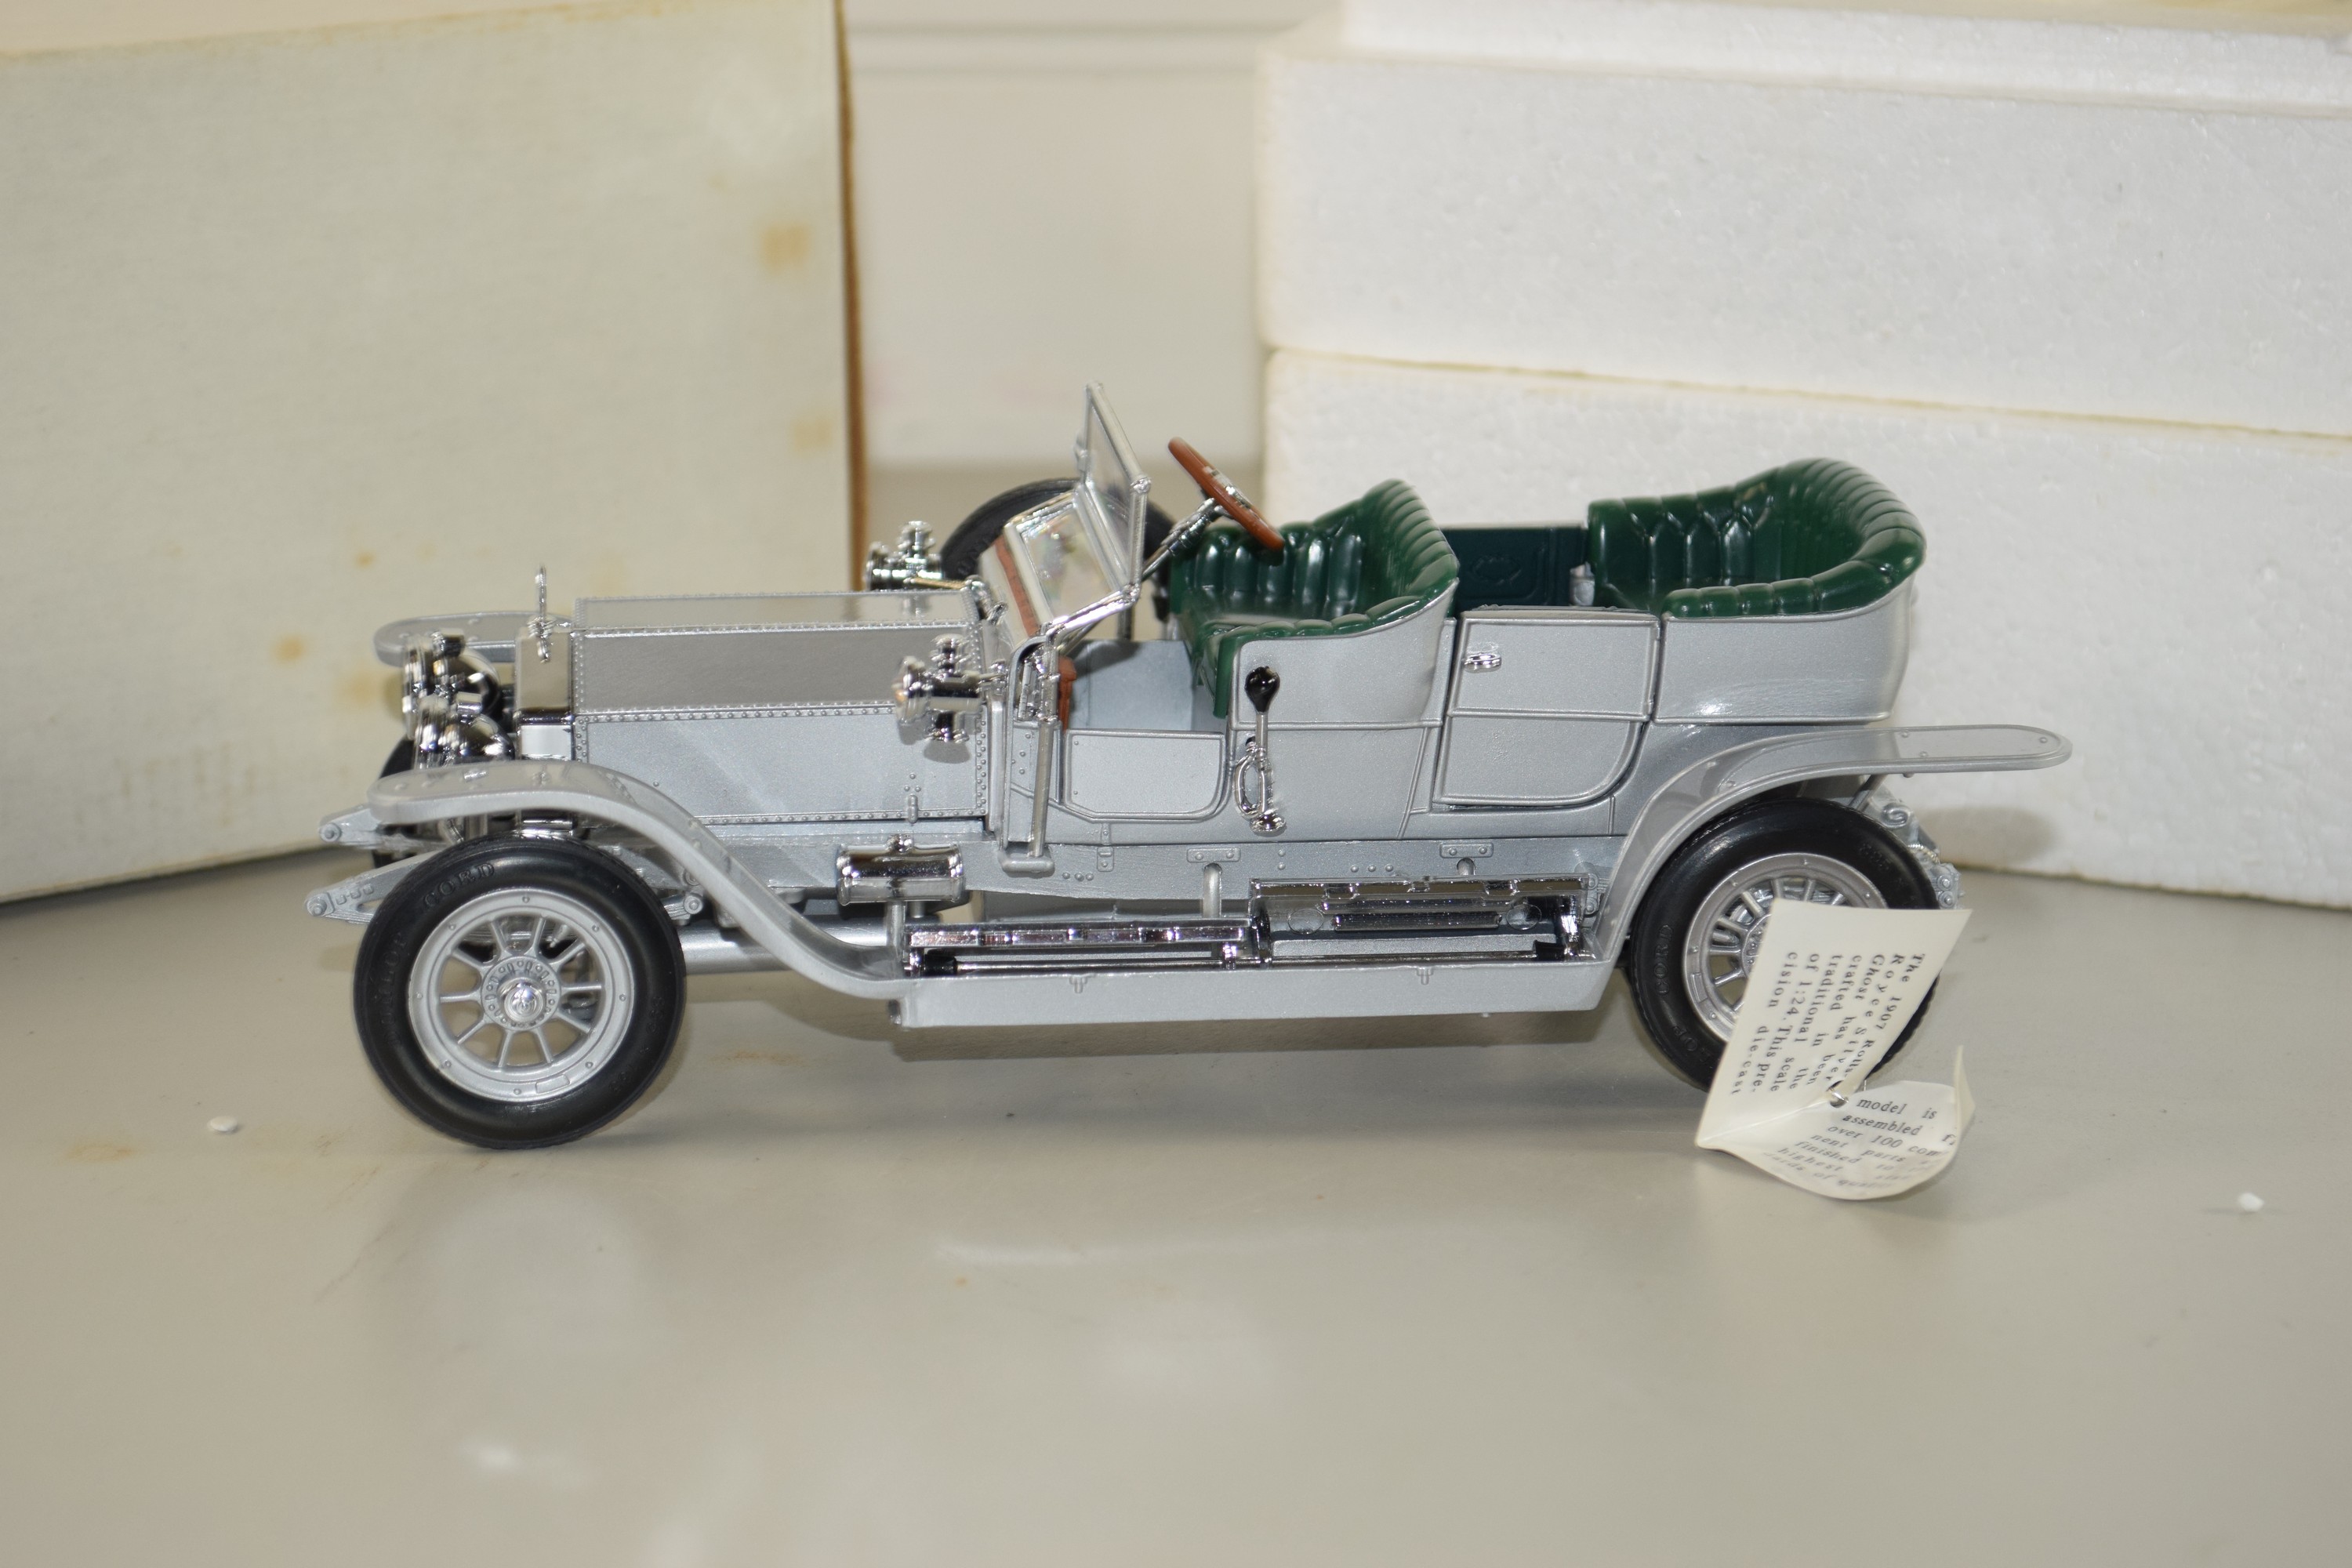 CASED MODEL OF A VINTAGE CAR IN ORIGINAL BOX, A ROLLS ROYCE SILVER GHOST